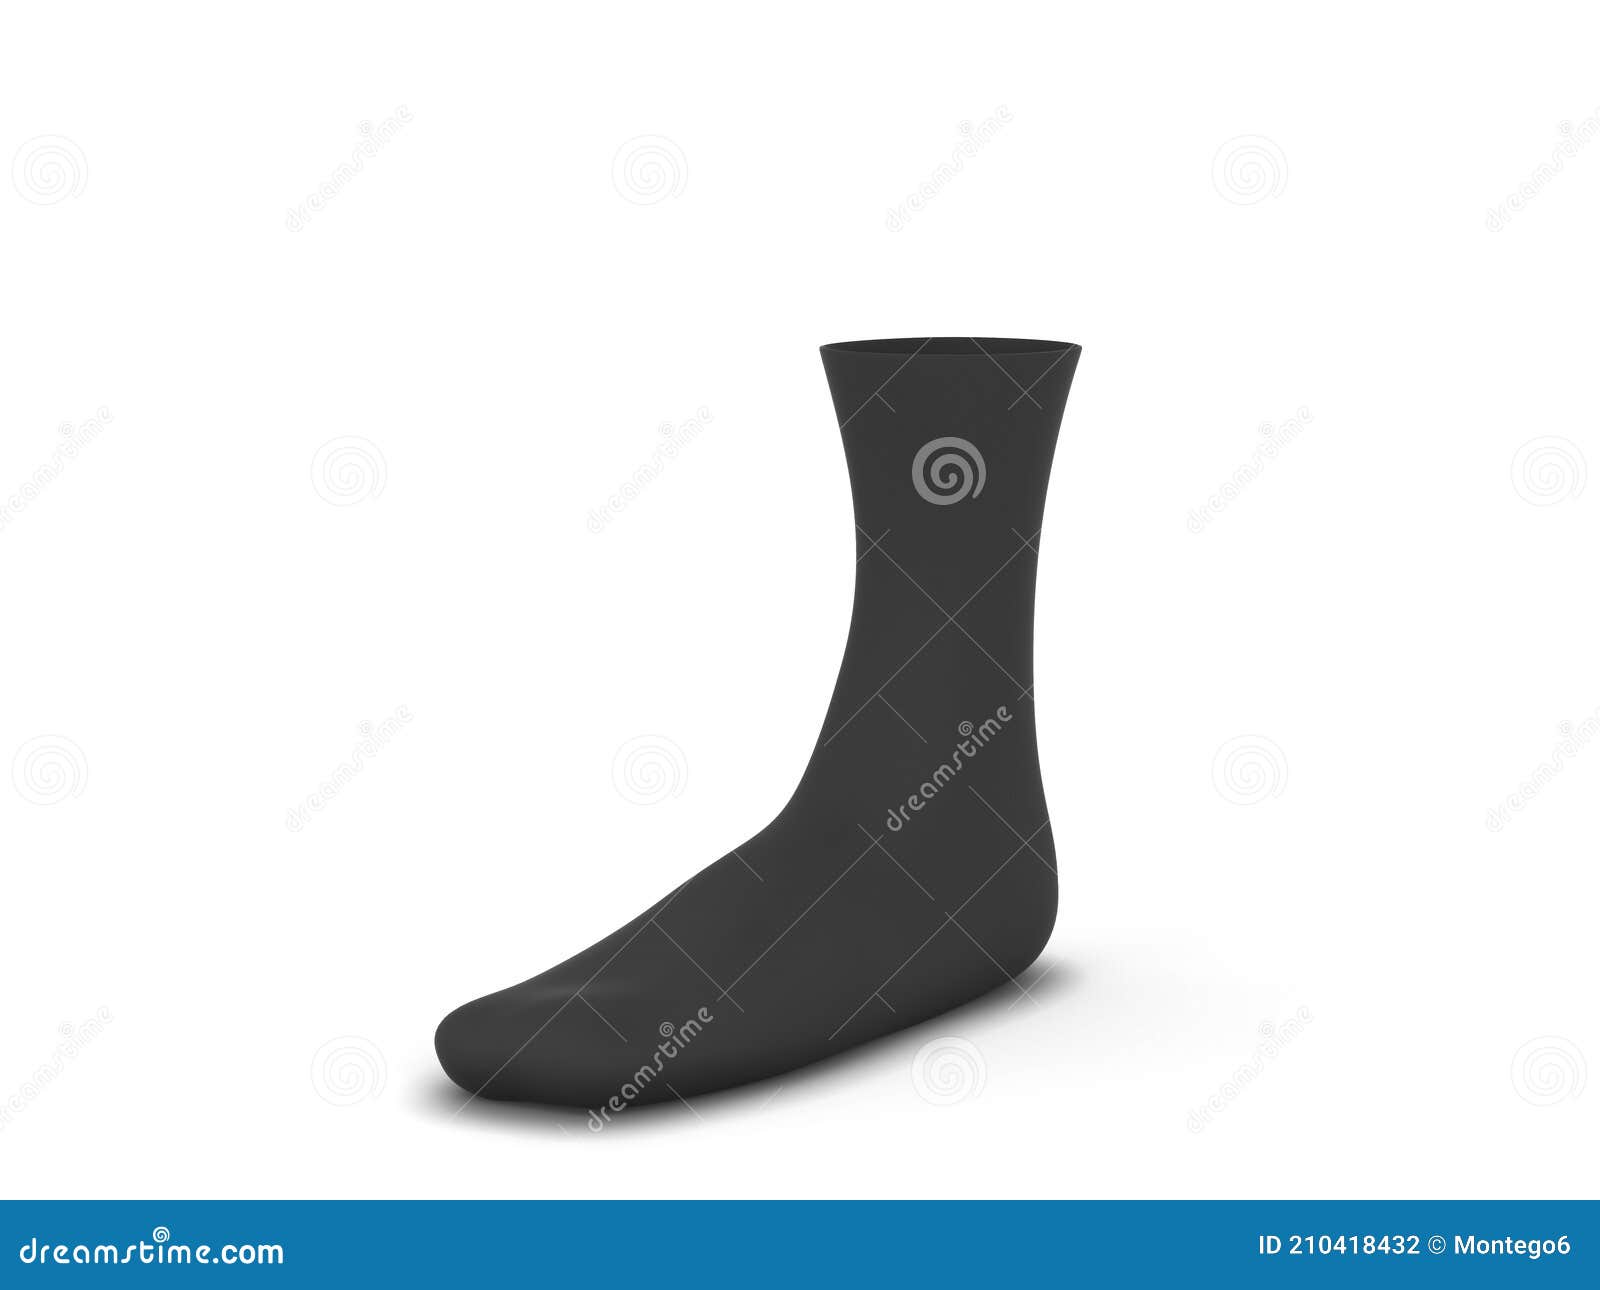 Blank cotton sock mockup stock illustration. Illustration of branding ...